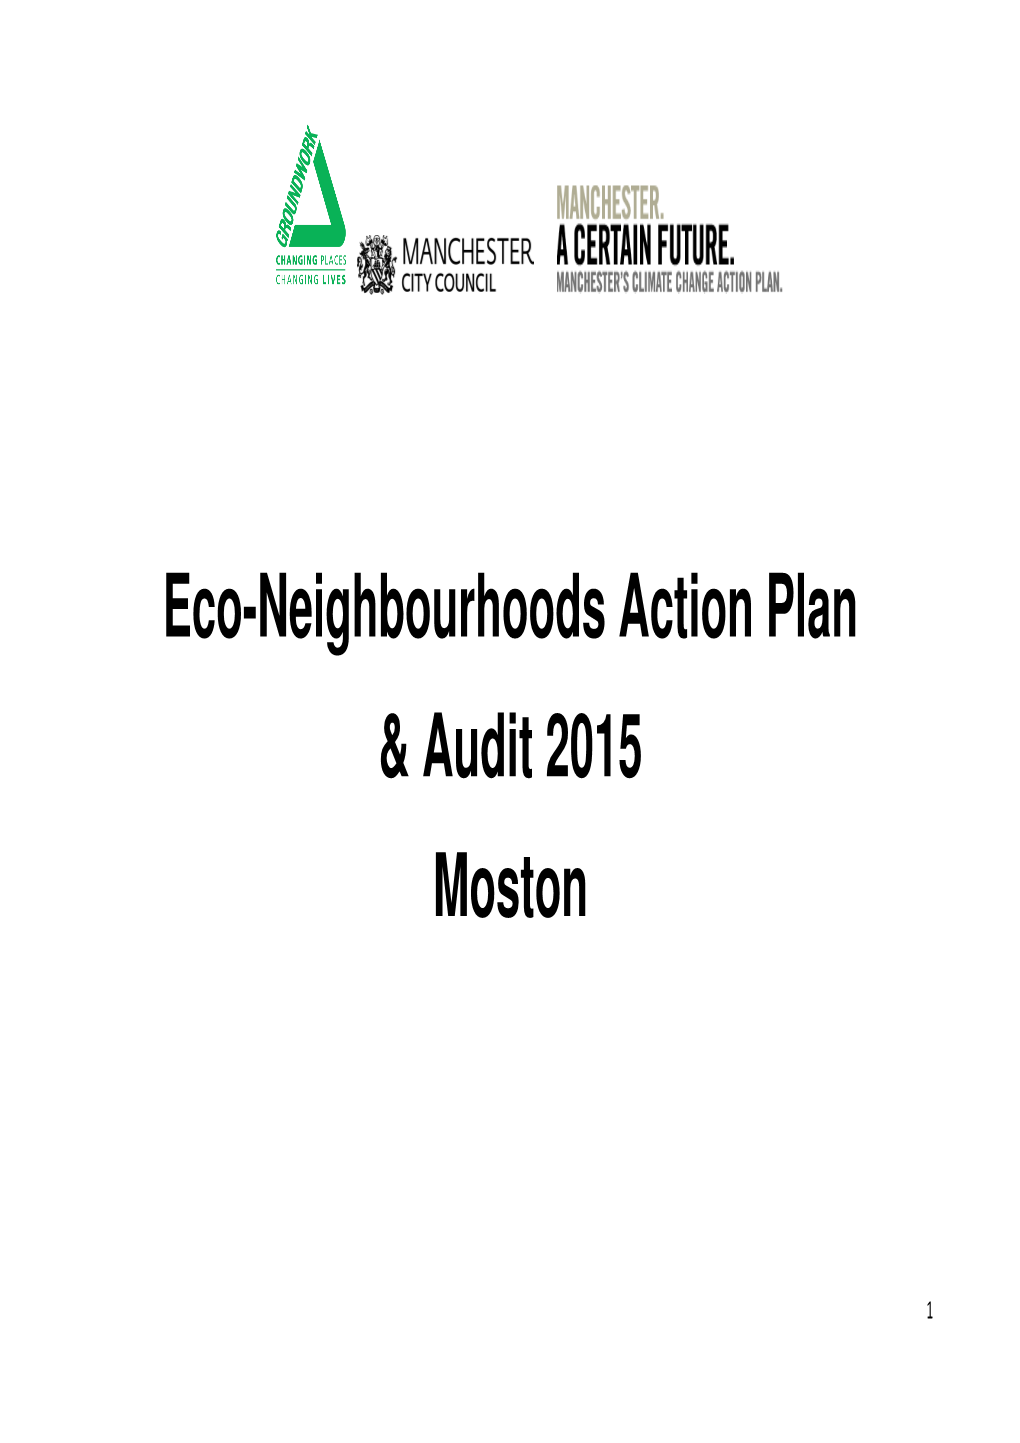 Eco-Neighbourhoods Action Plan & Audit 2015 Moston